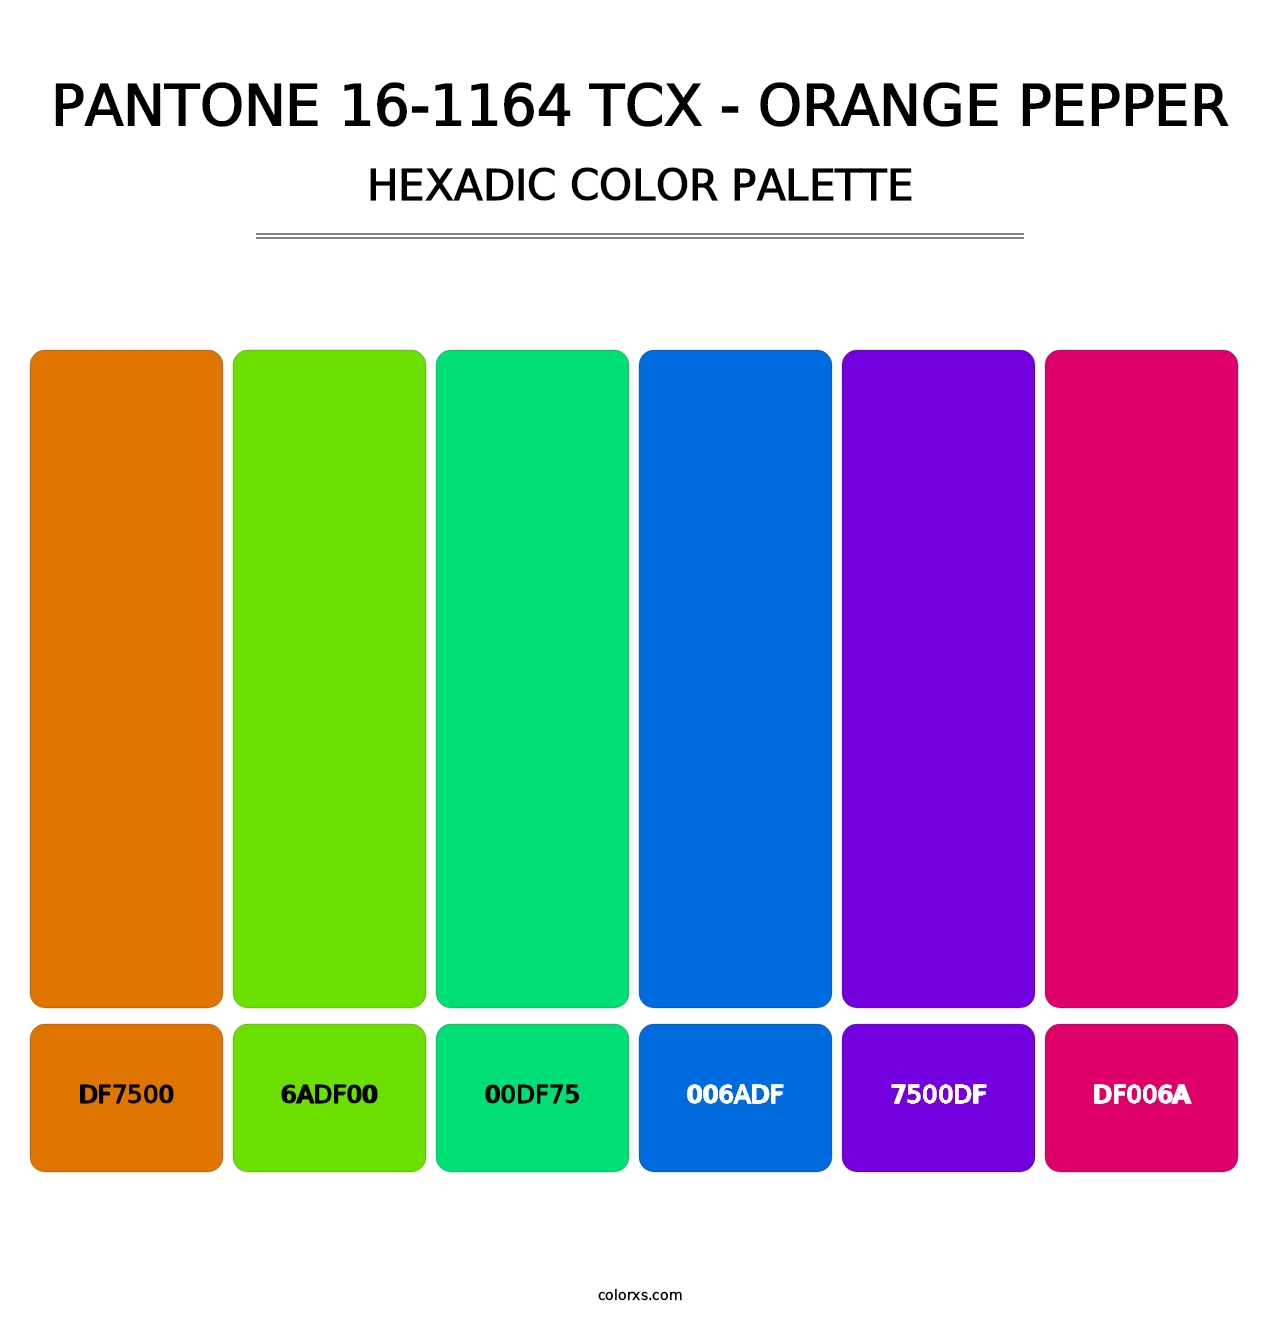 PANTONE 16-1164 TCX - Orange Pepper - Hexadic Color Palette